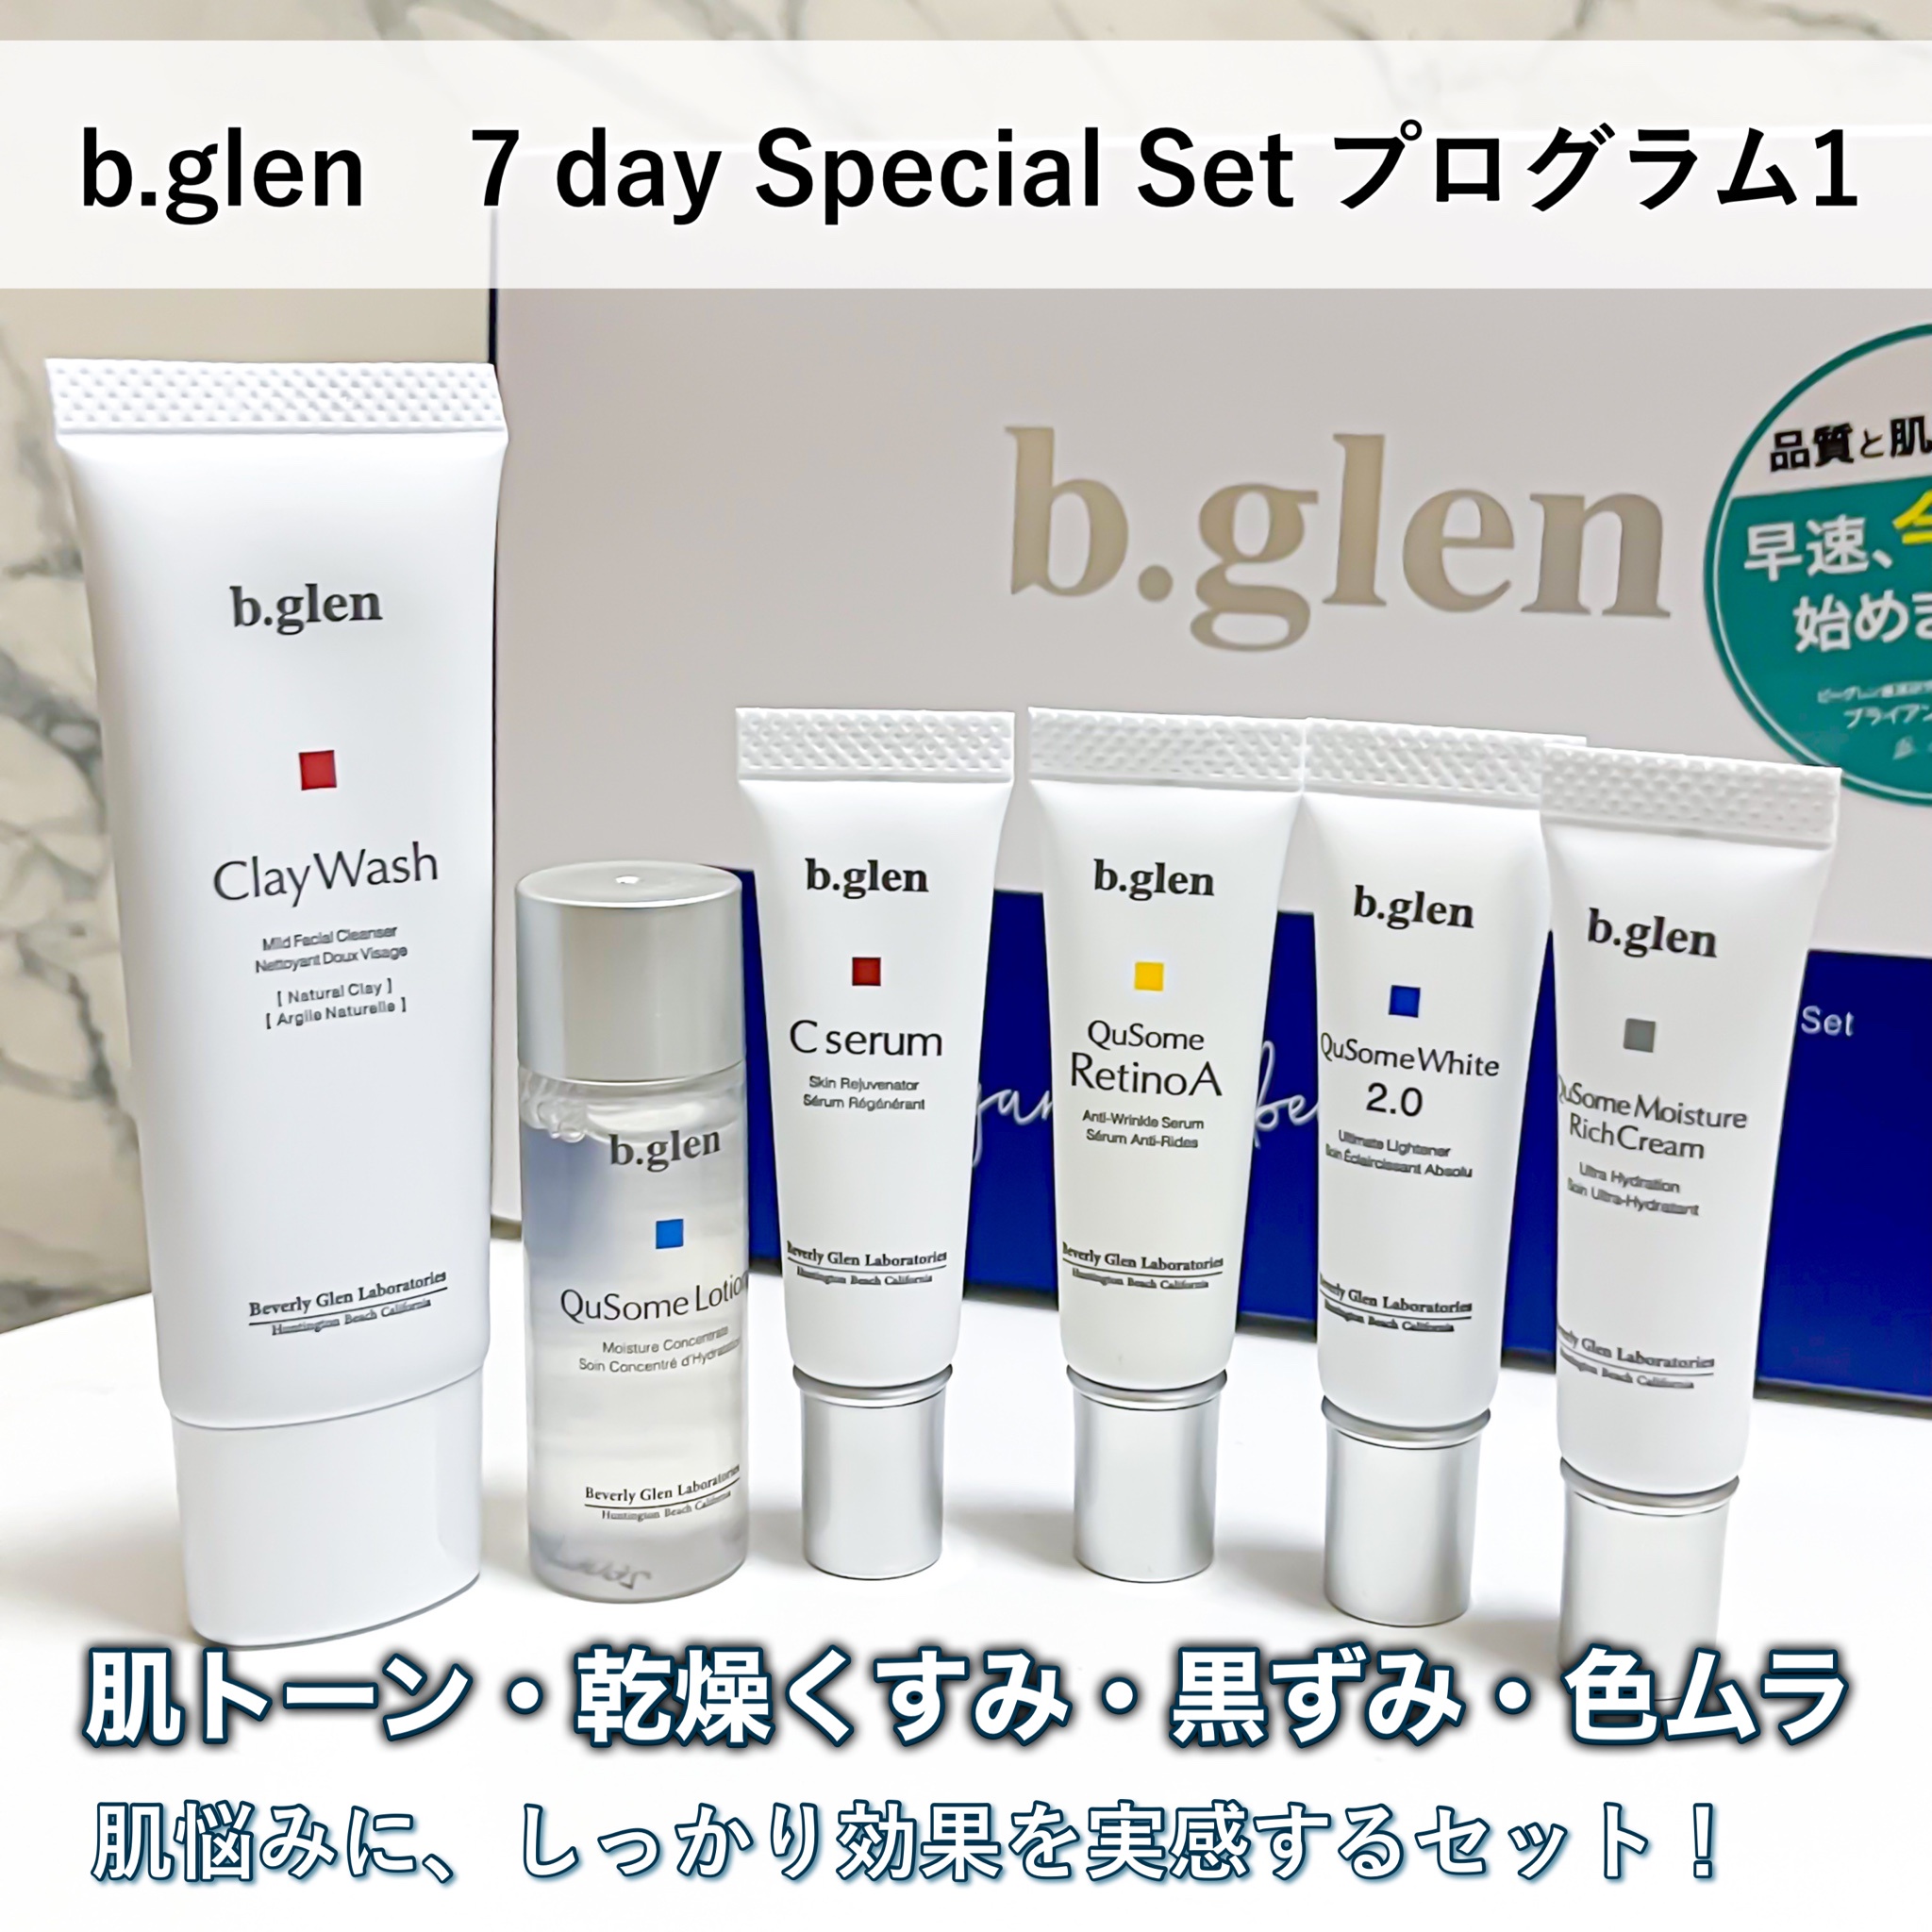 SALE／60%OFF ビーグレン b.glen 7day Special Set Program2 